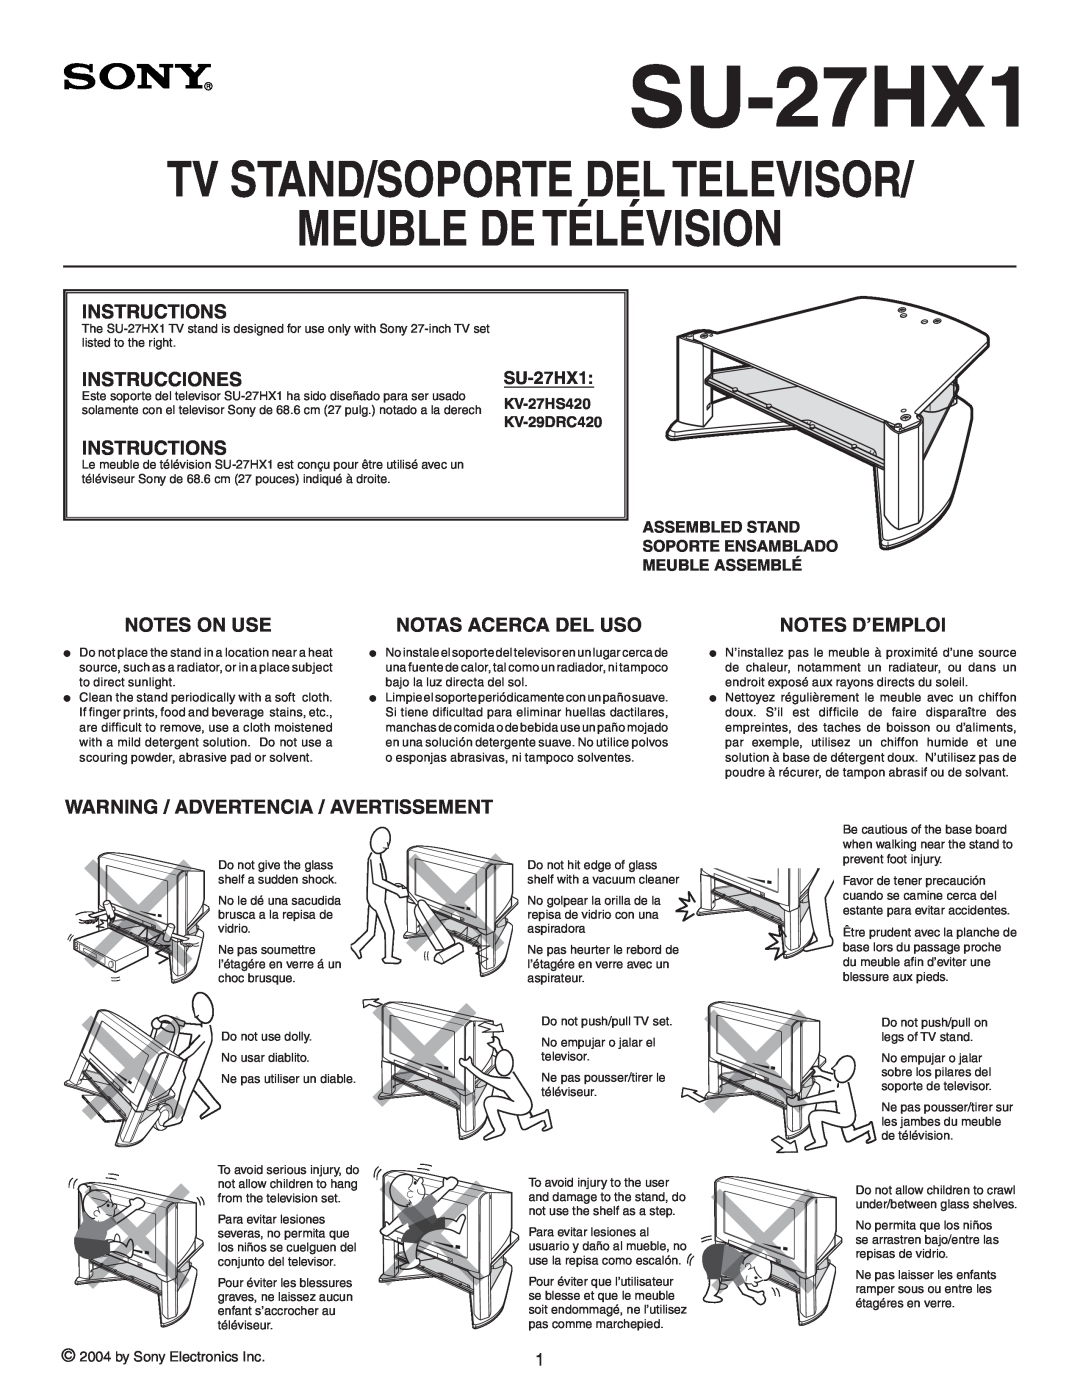 Sony SU-27HX1 manual Meuble De Télévision, Tv Stand/Soporte Del Televisor, Instructions, Instrucciones, Notes On Use 